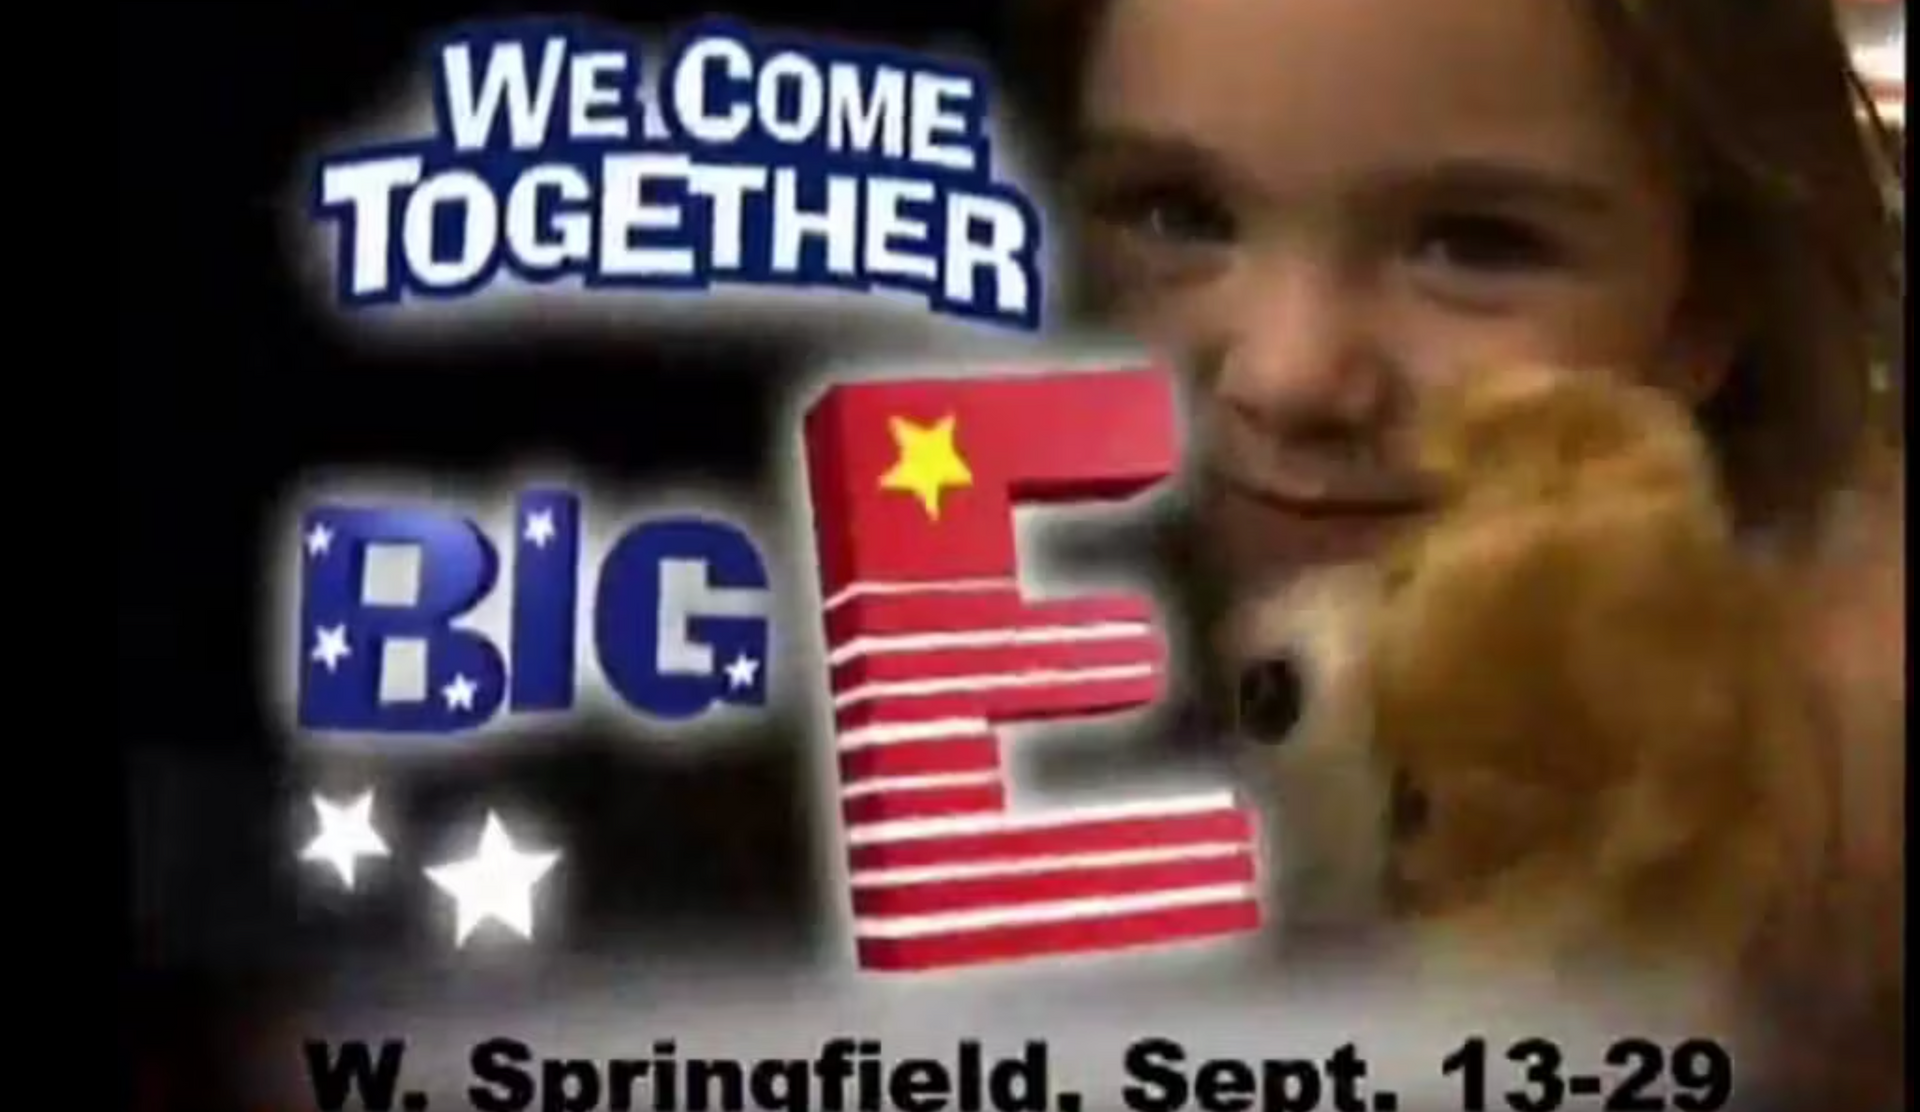 The Big E: We Come Together